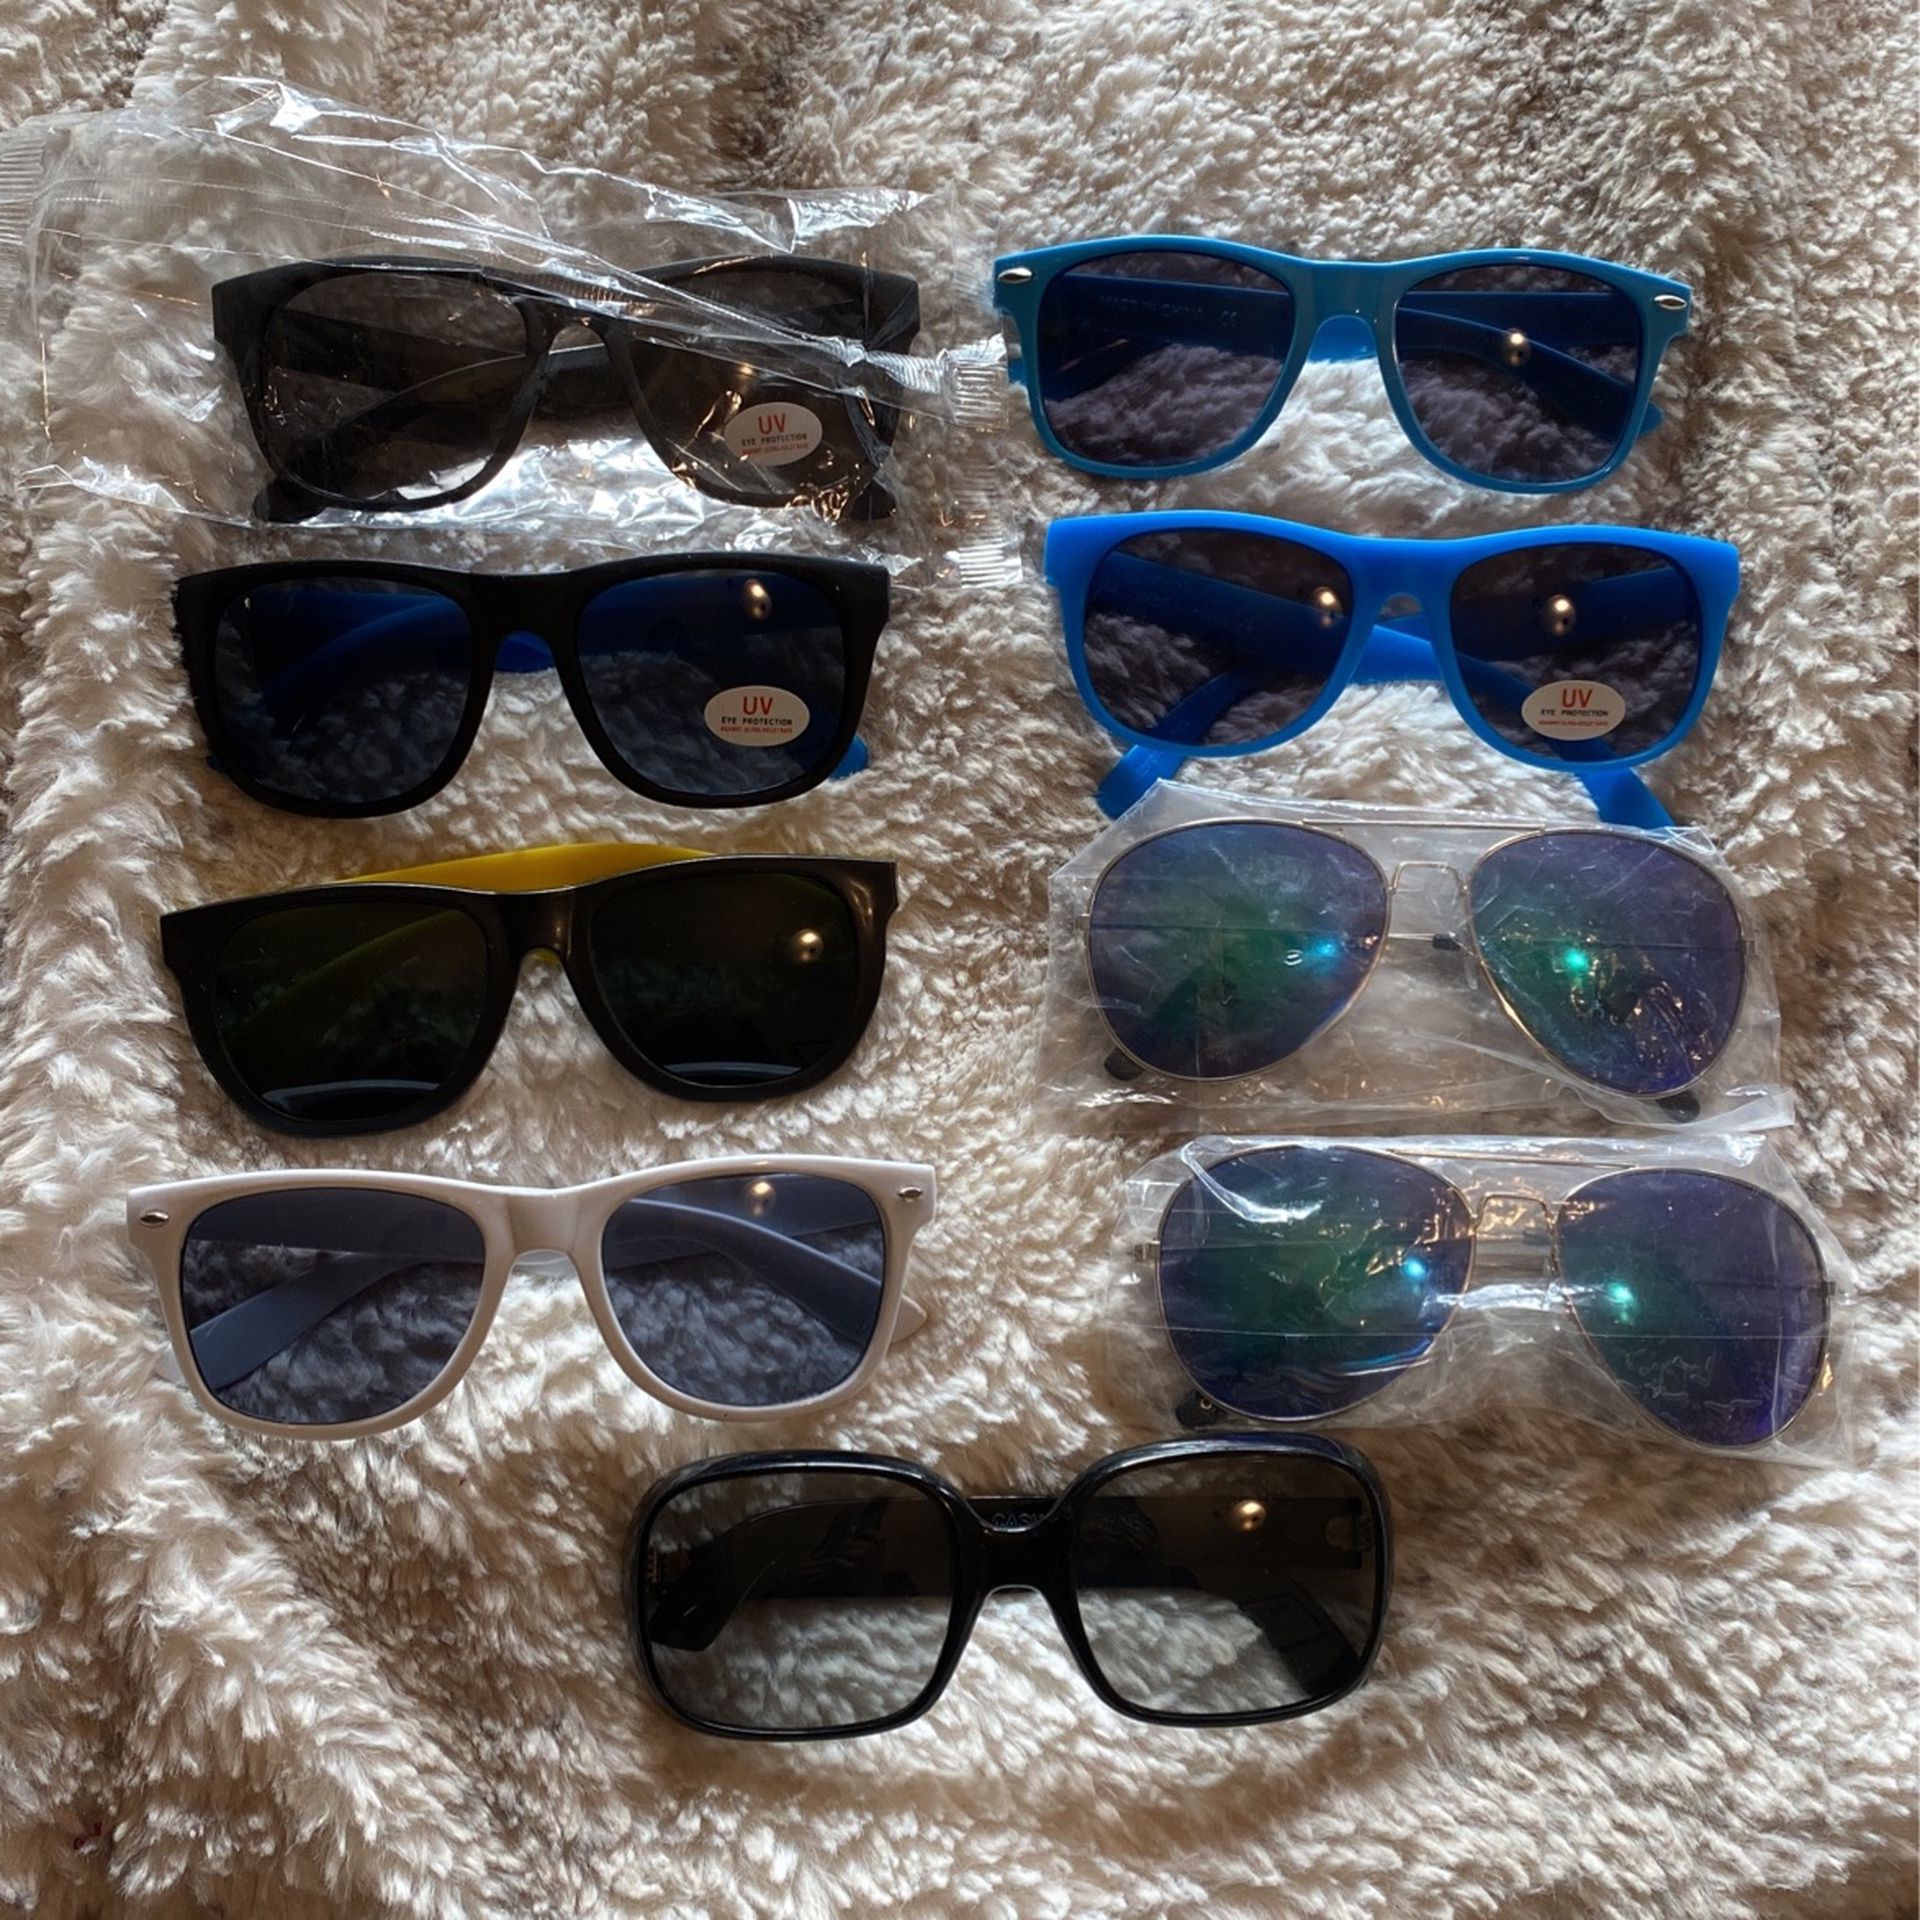 9 pairs of assorted sunglasses